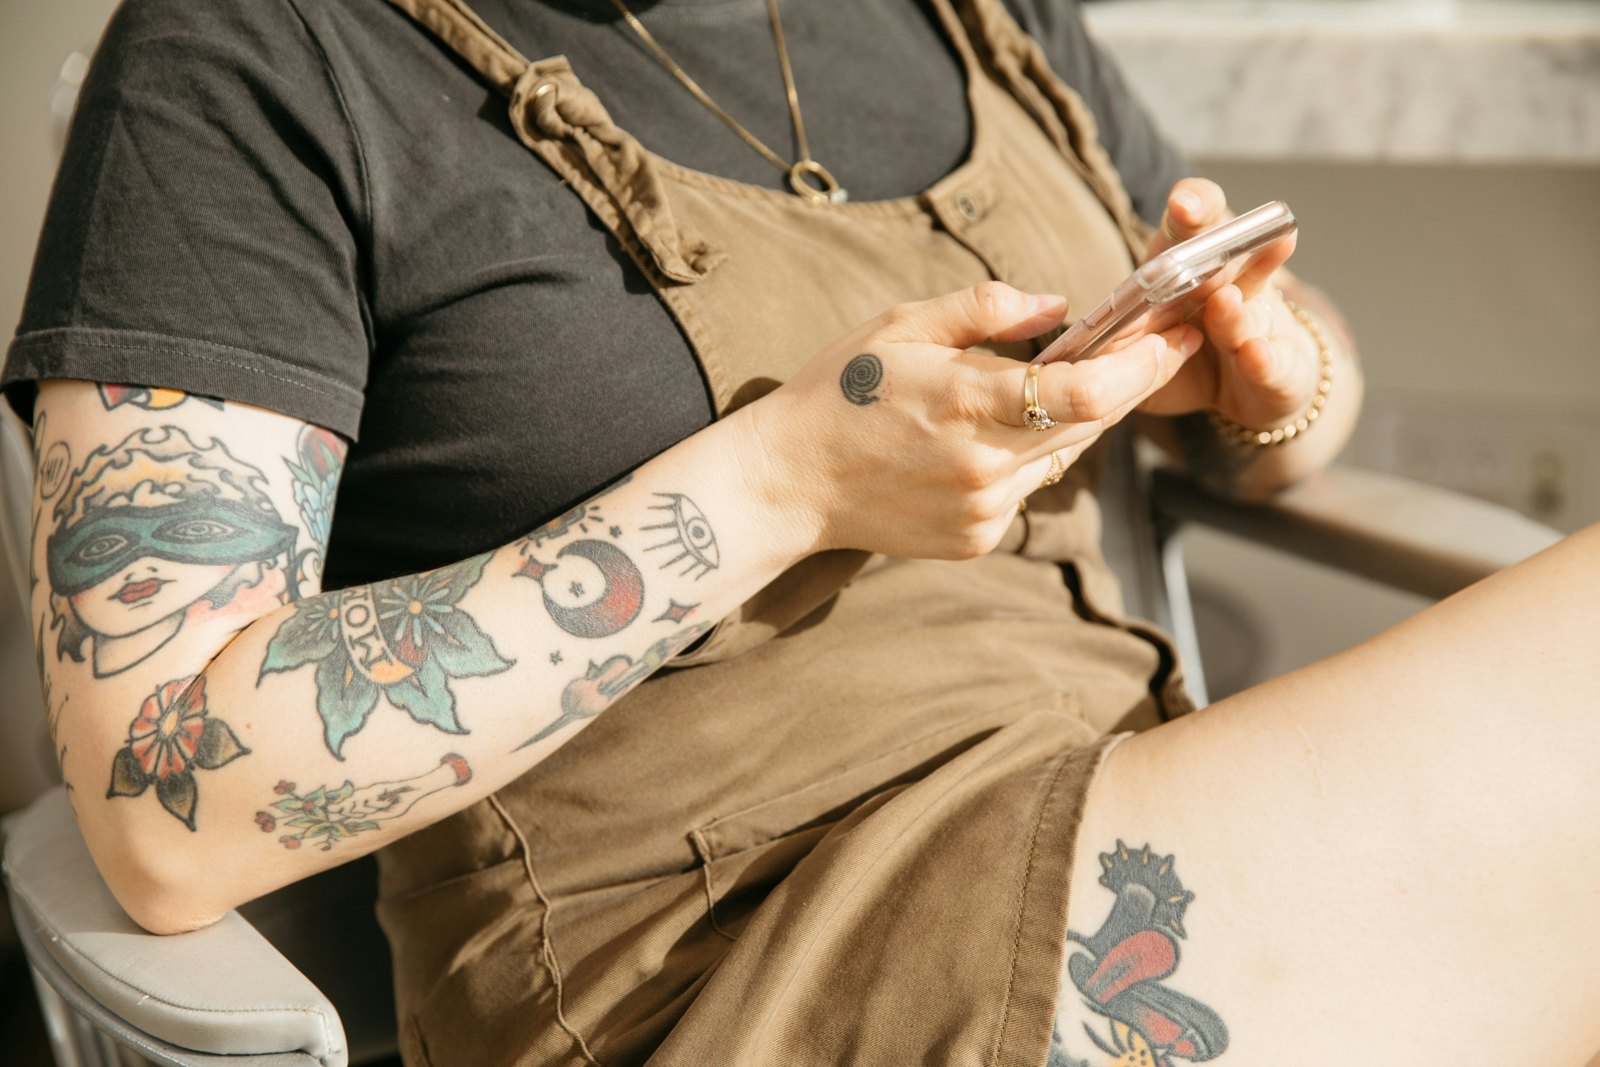 50 finger tattoos ideas for men and women